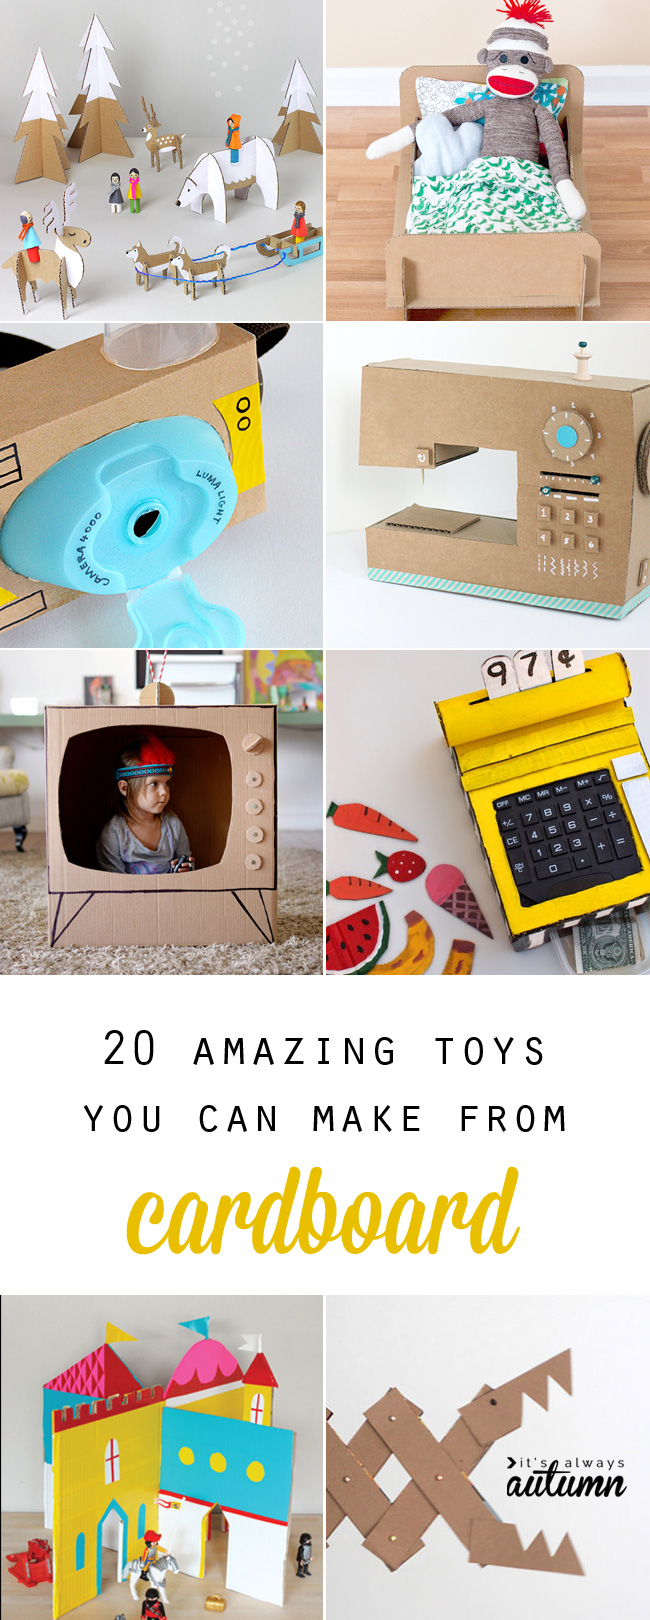 5 cool ideas from cardboard 